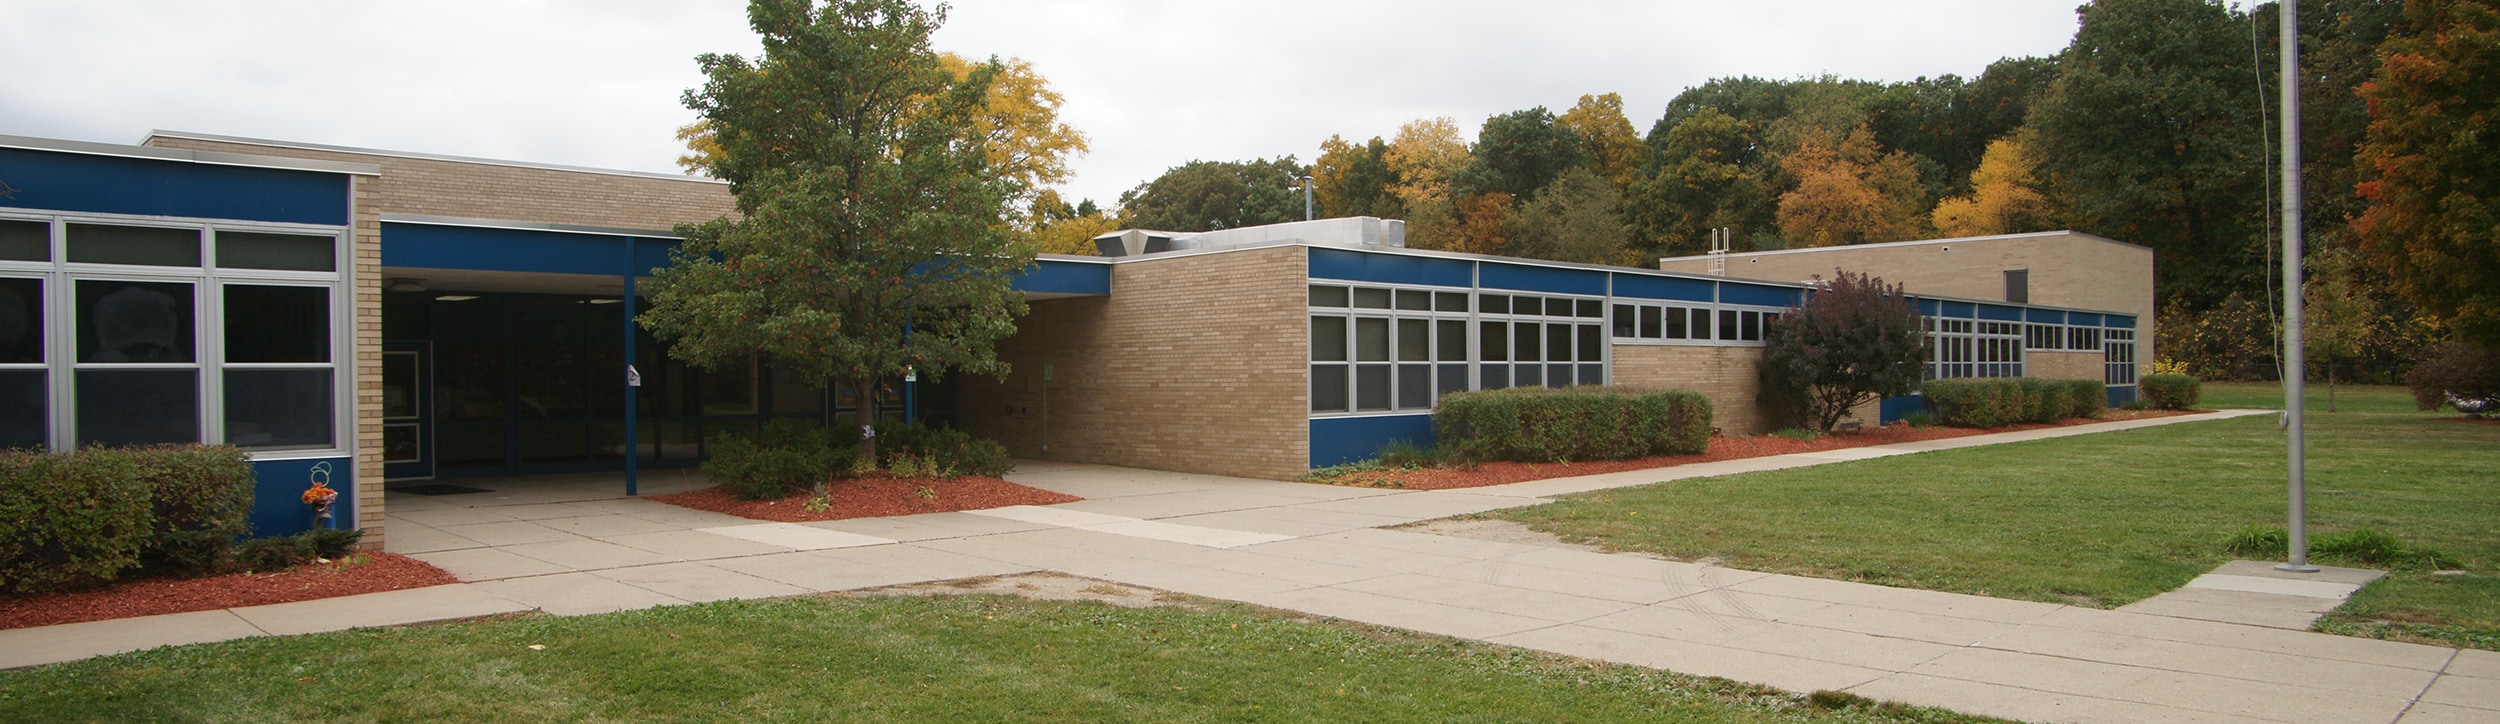 Lakewood Elementary Ann Arbor Public Schools Bond Ann Arbor Public